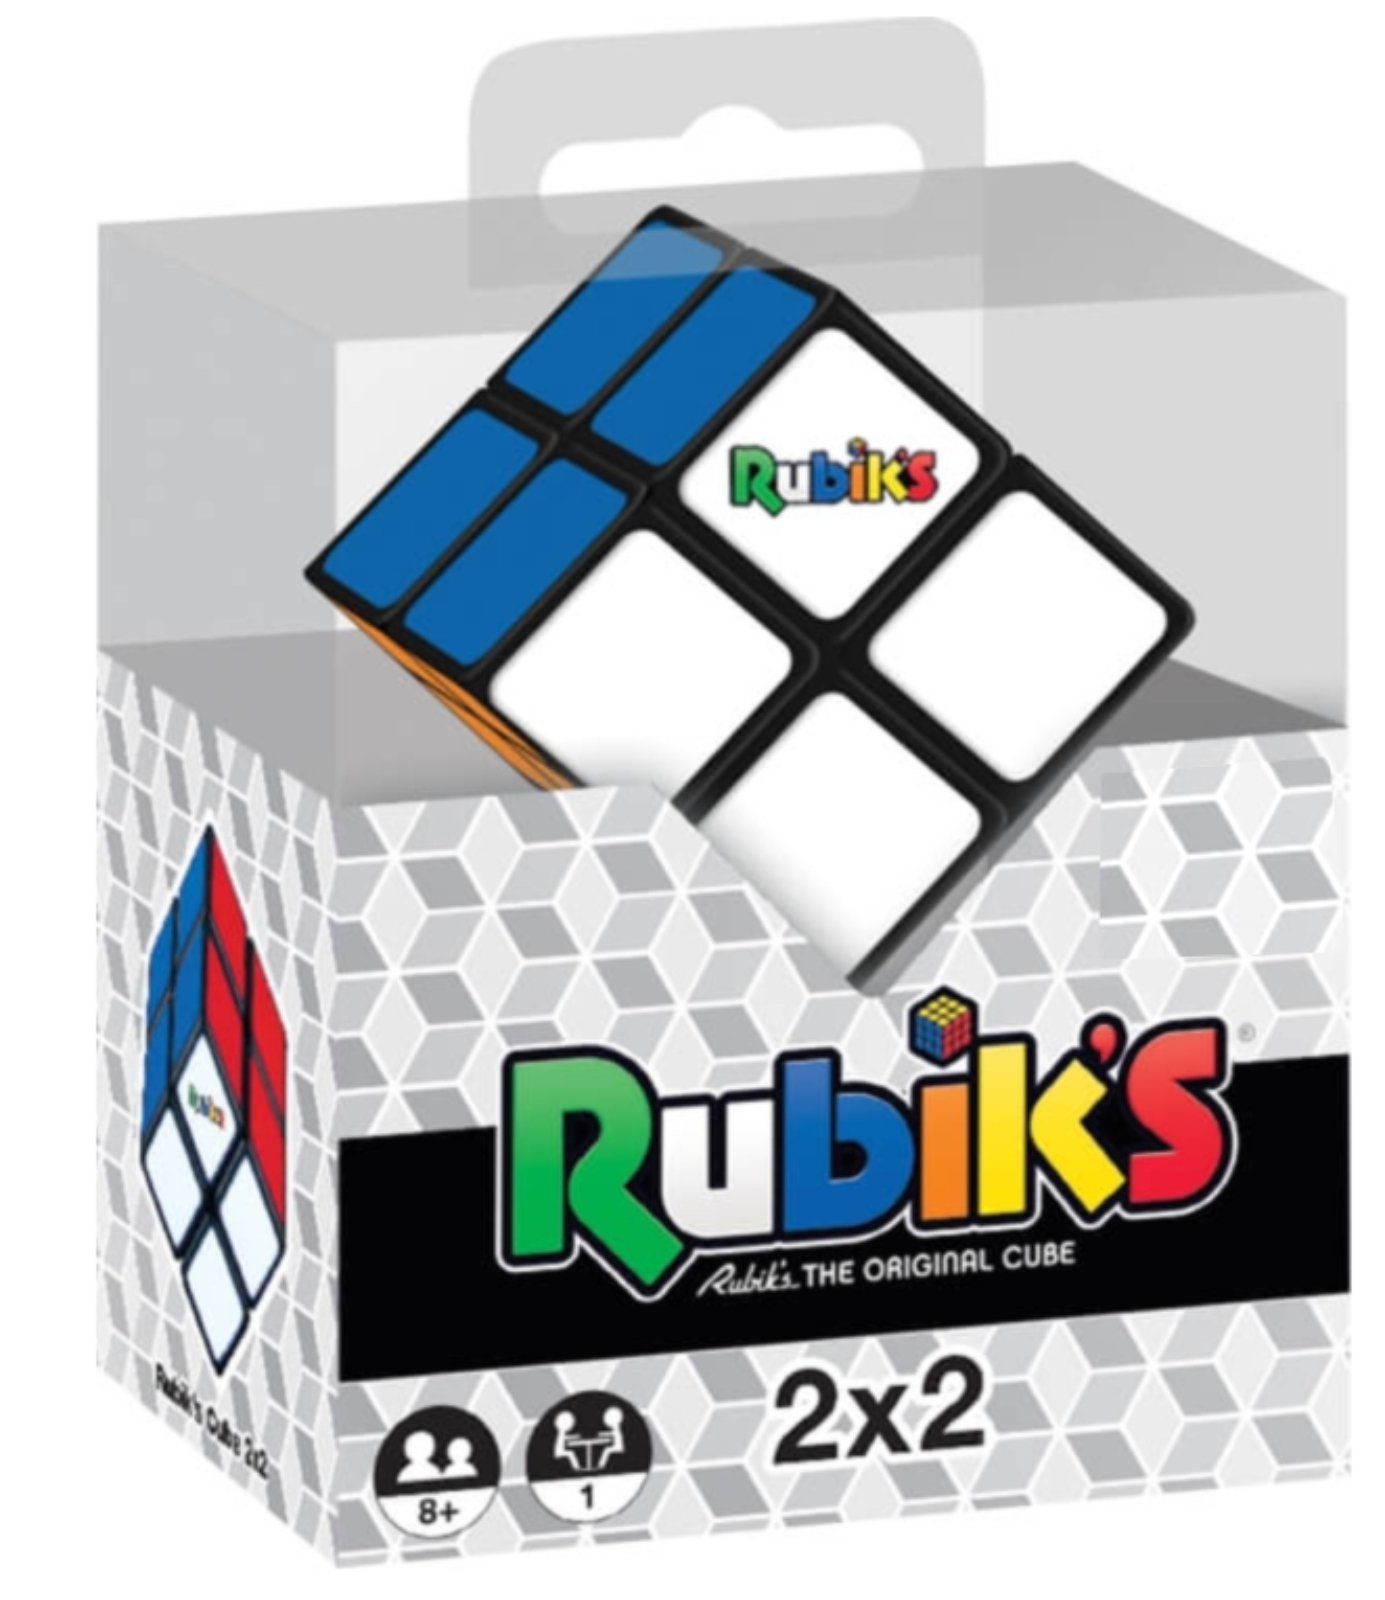 Beginner 3D-Puzzle Puzzleteile 1 ORIGINAL, Cube 2 Rubiks x Rubik´s 2 Zauberwürfel